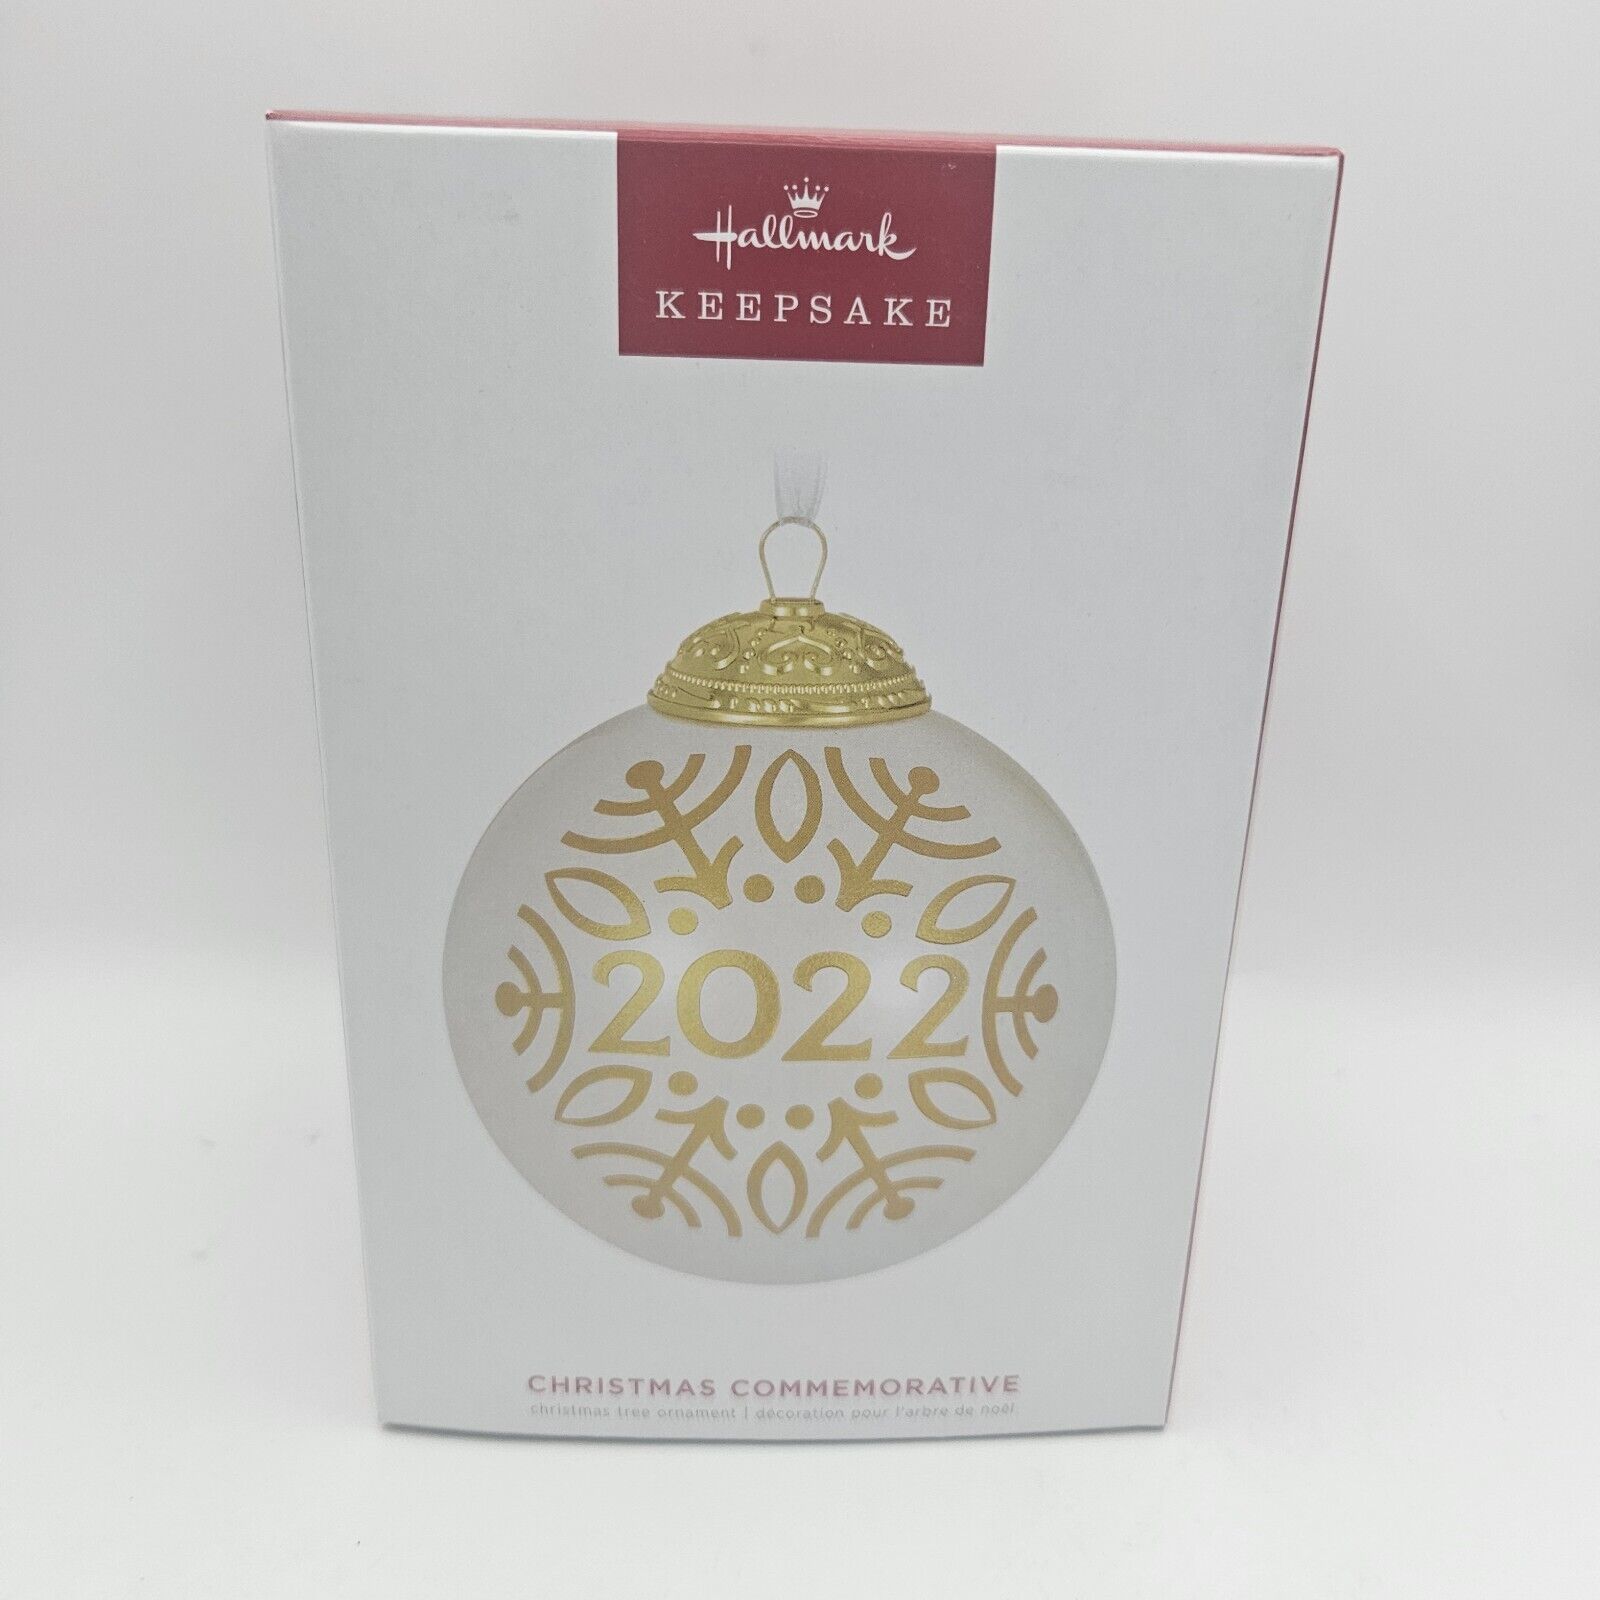 Hallmark Christmas Commemorative 2022 Keepsake Ornament 10th In Series Glass